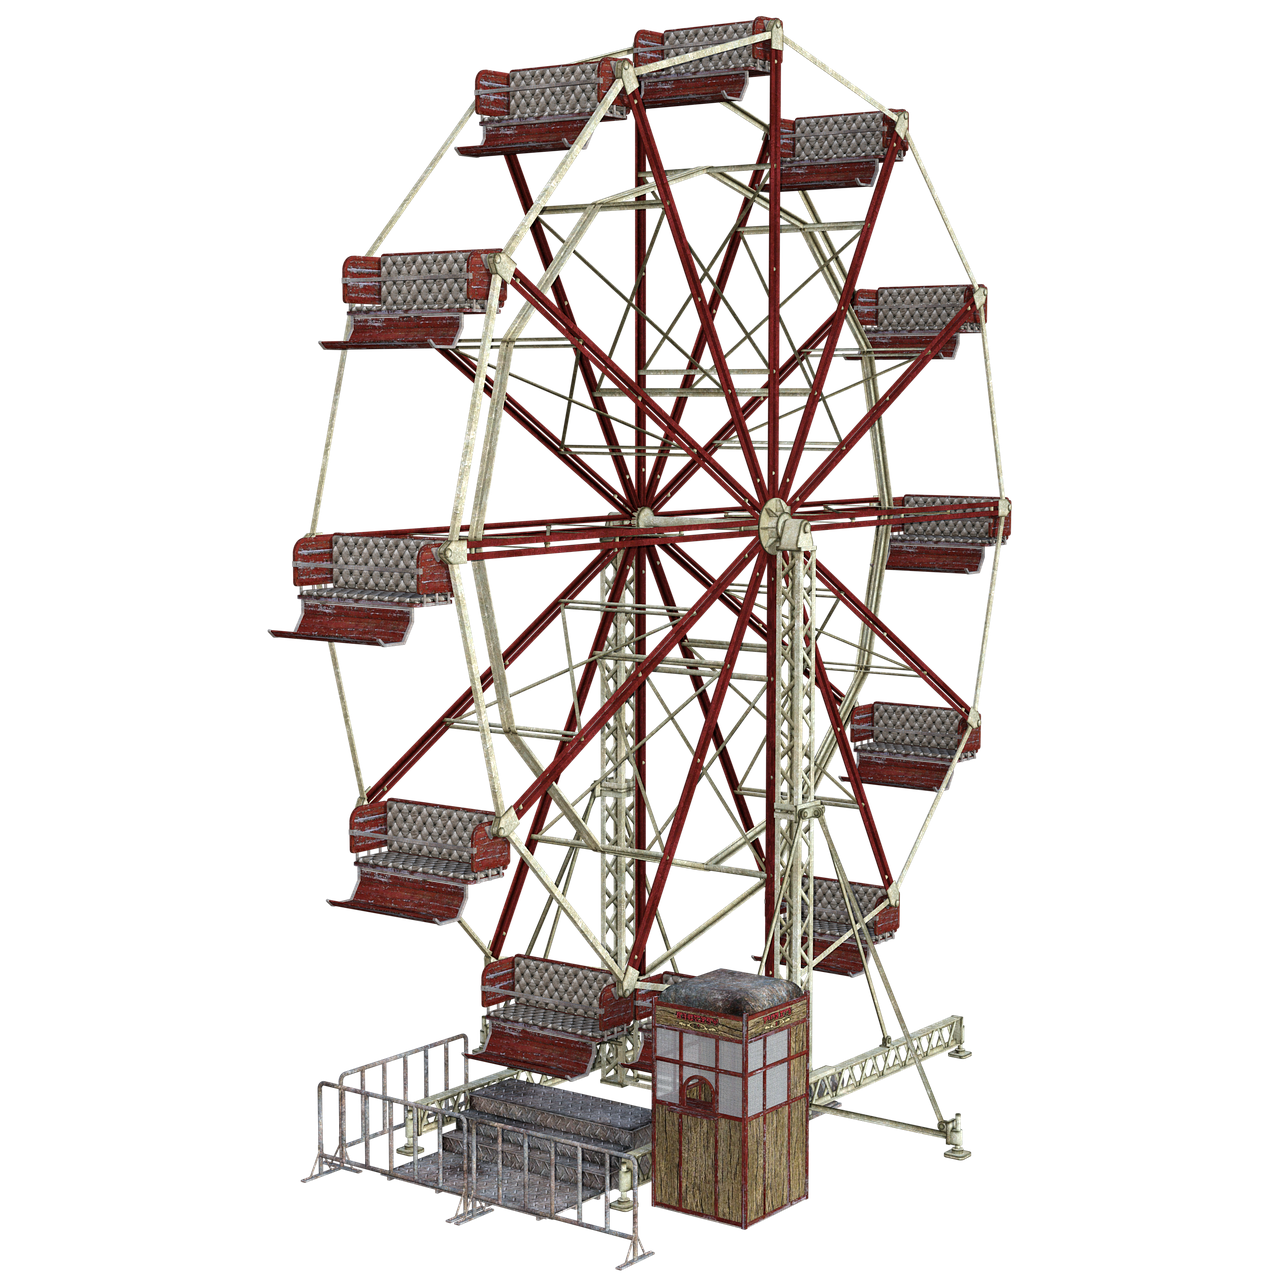 3D Printing Projects: Ferris Wheel